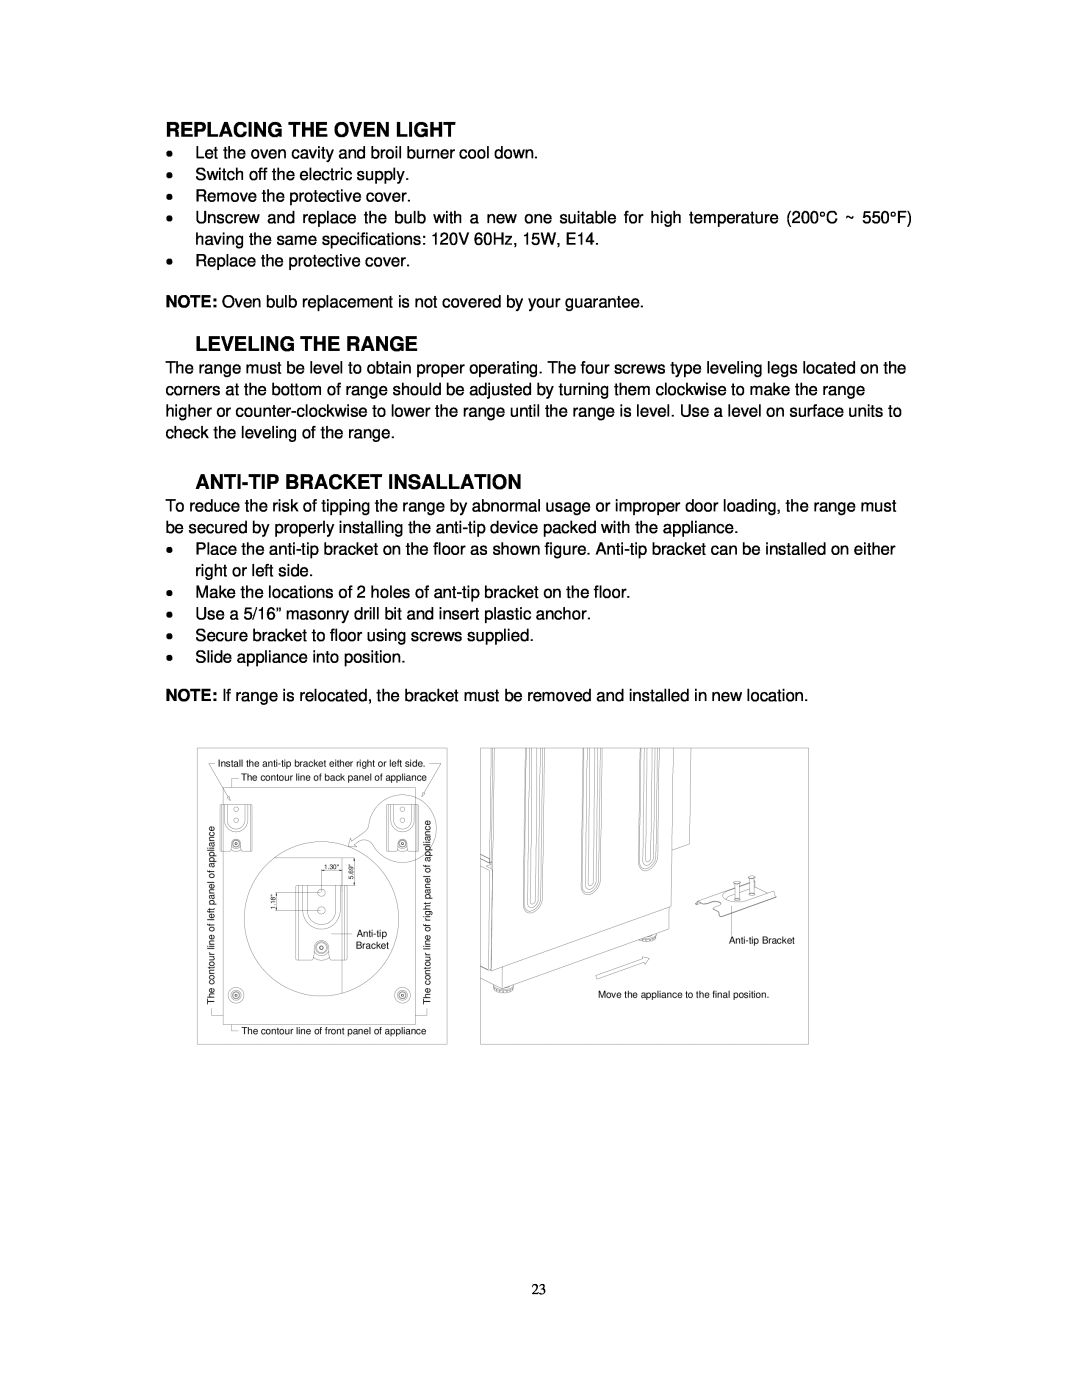 Avanti DG2450SS, DG2451W instruction manual Replacing The Oven Light, Leveling The Range, Anti-Tip Bracket Insallation 